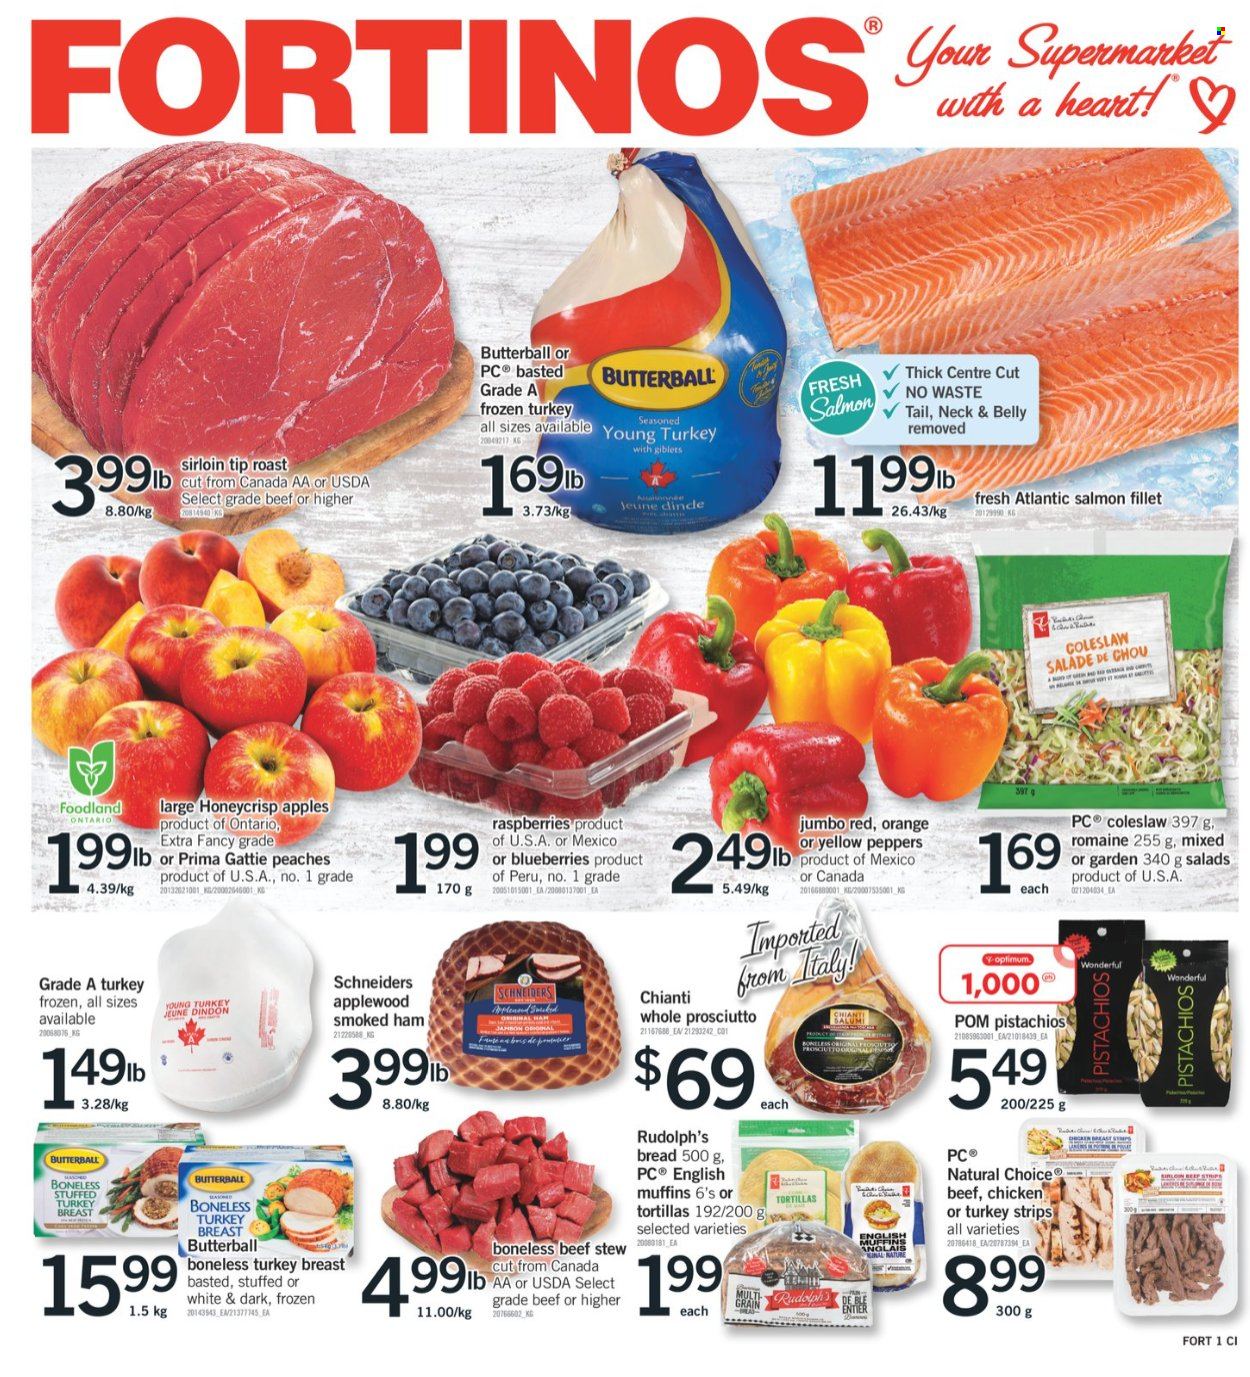 thumbnail - Circulaire Fortinos - 23 Septembre 2021 - 29 Septembre 2021 - Produits soldés - tortilla, salade, chou, dindon. Page 1.